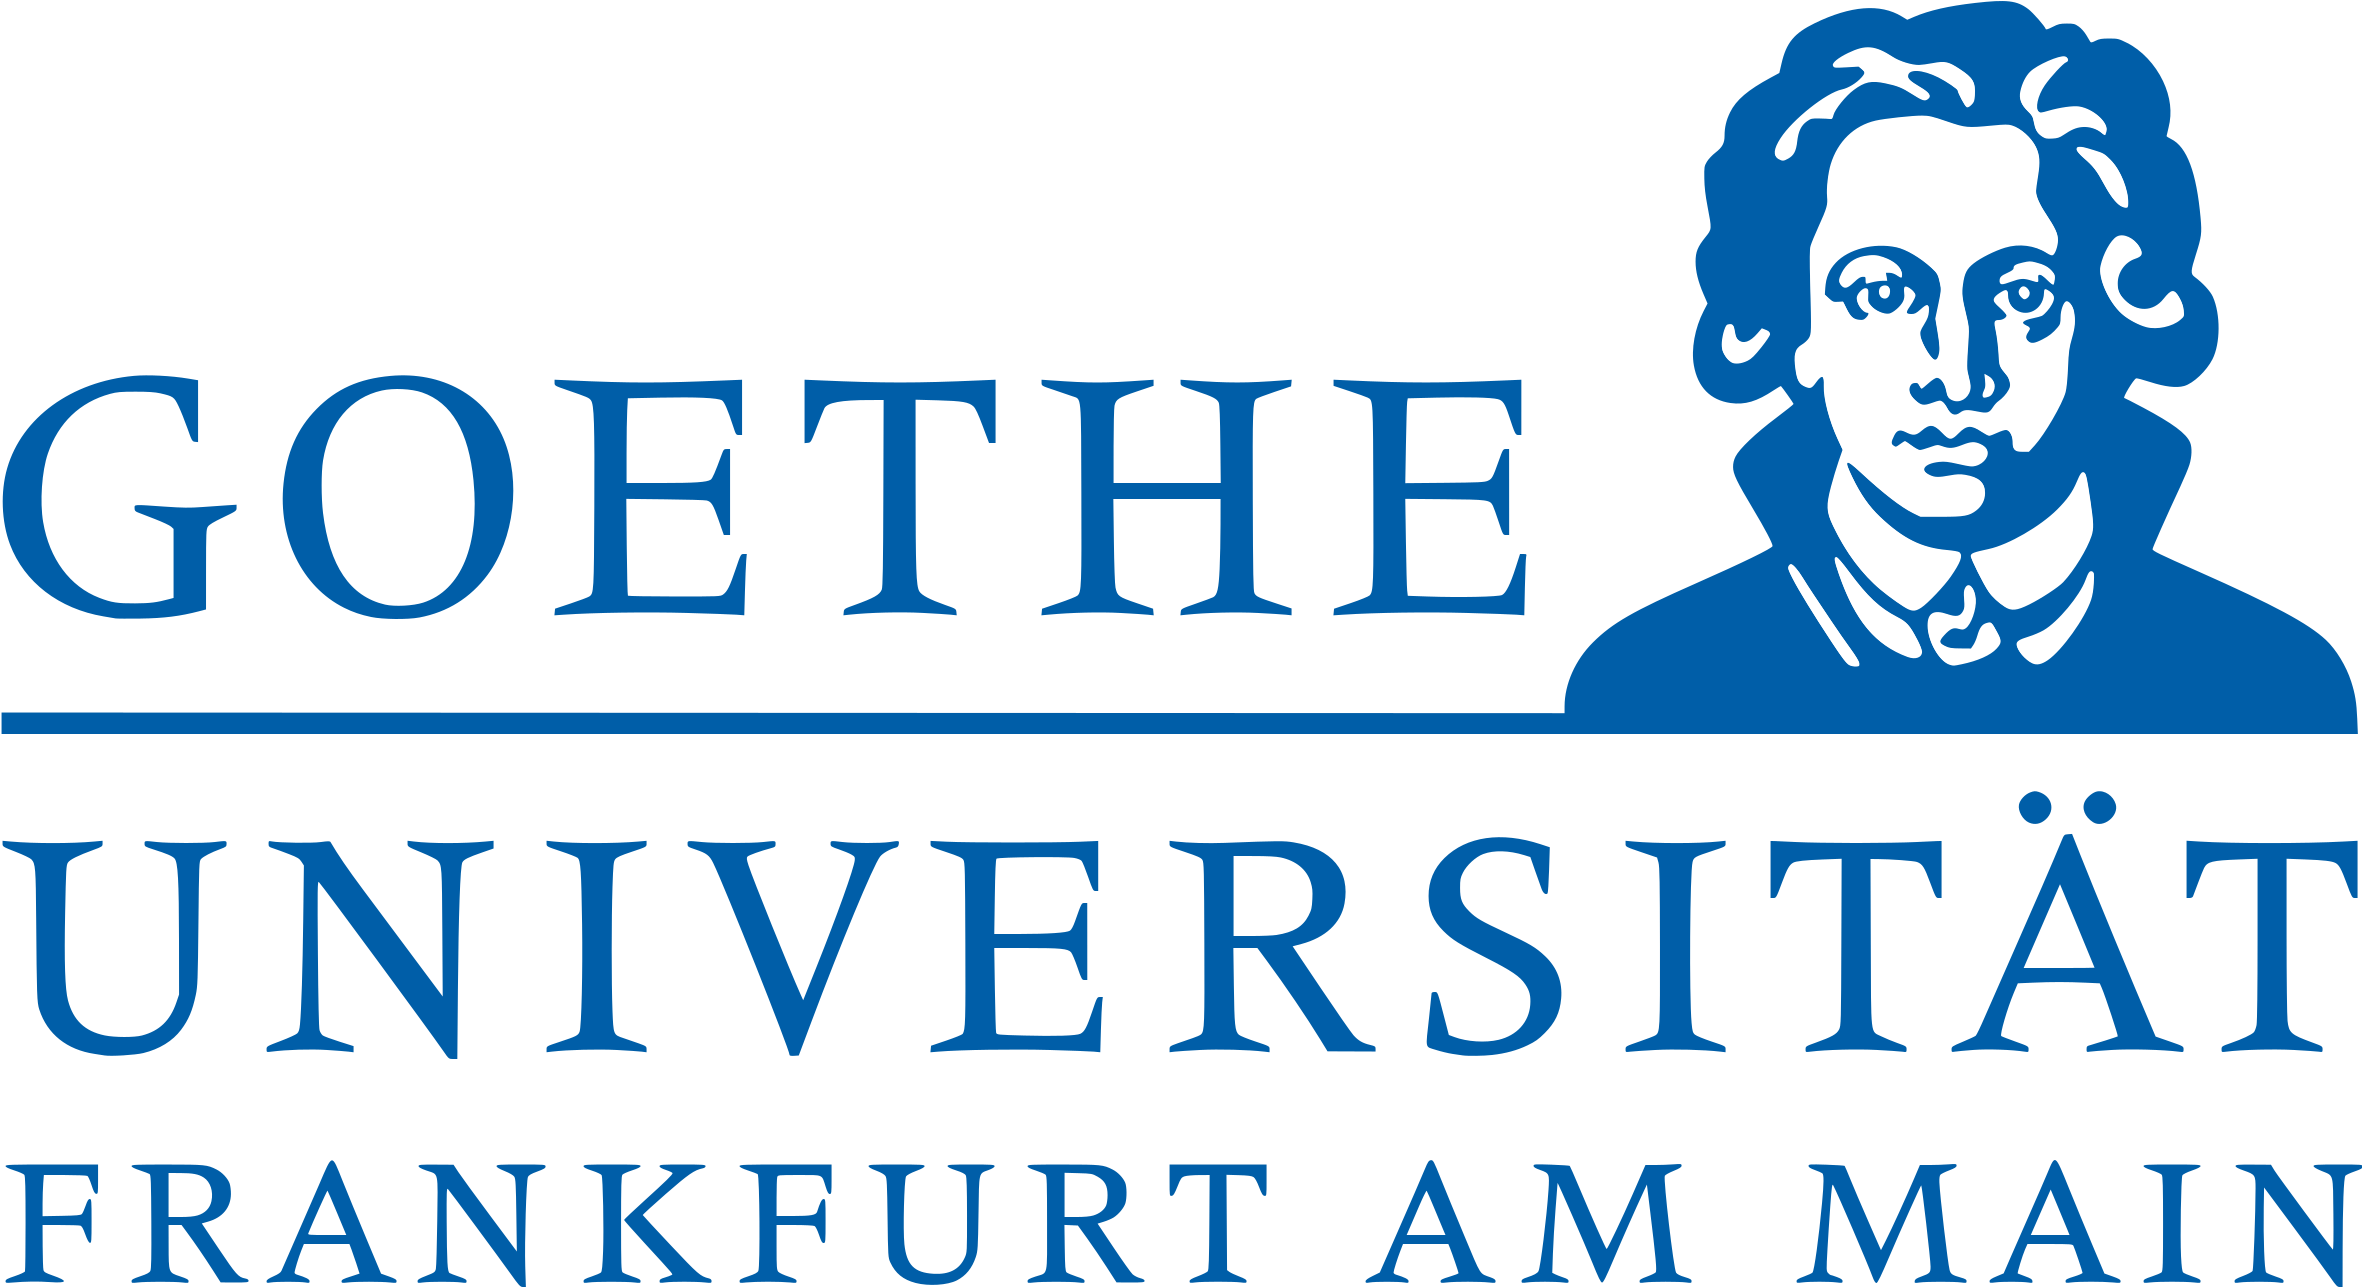 Goethe Universität Logo